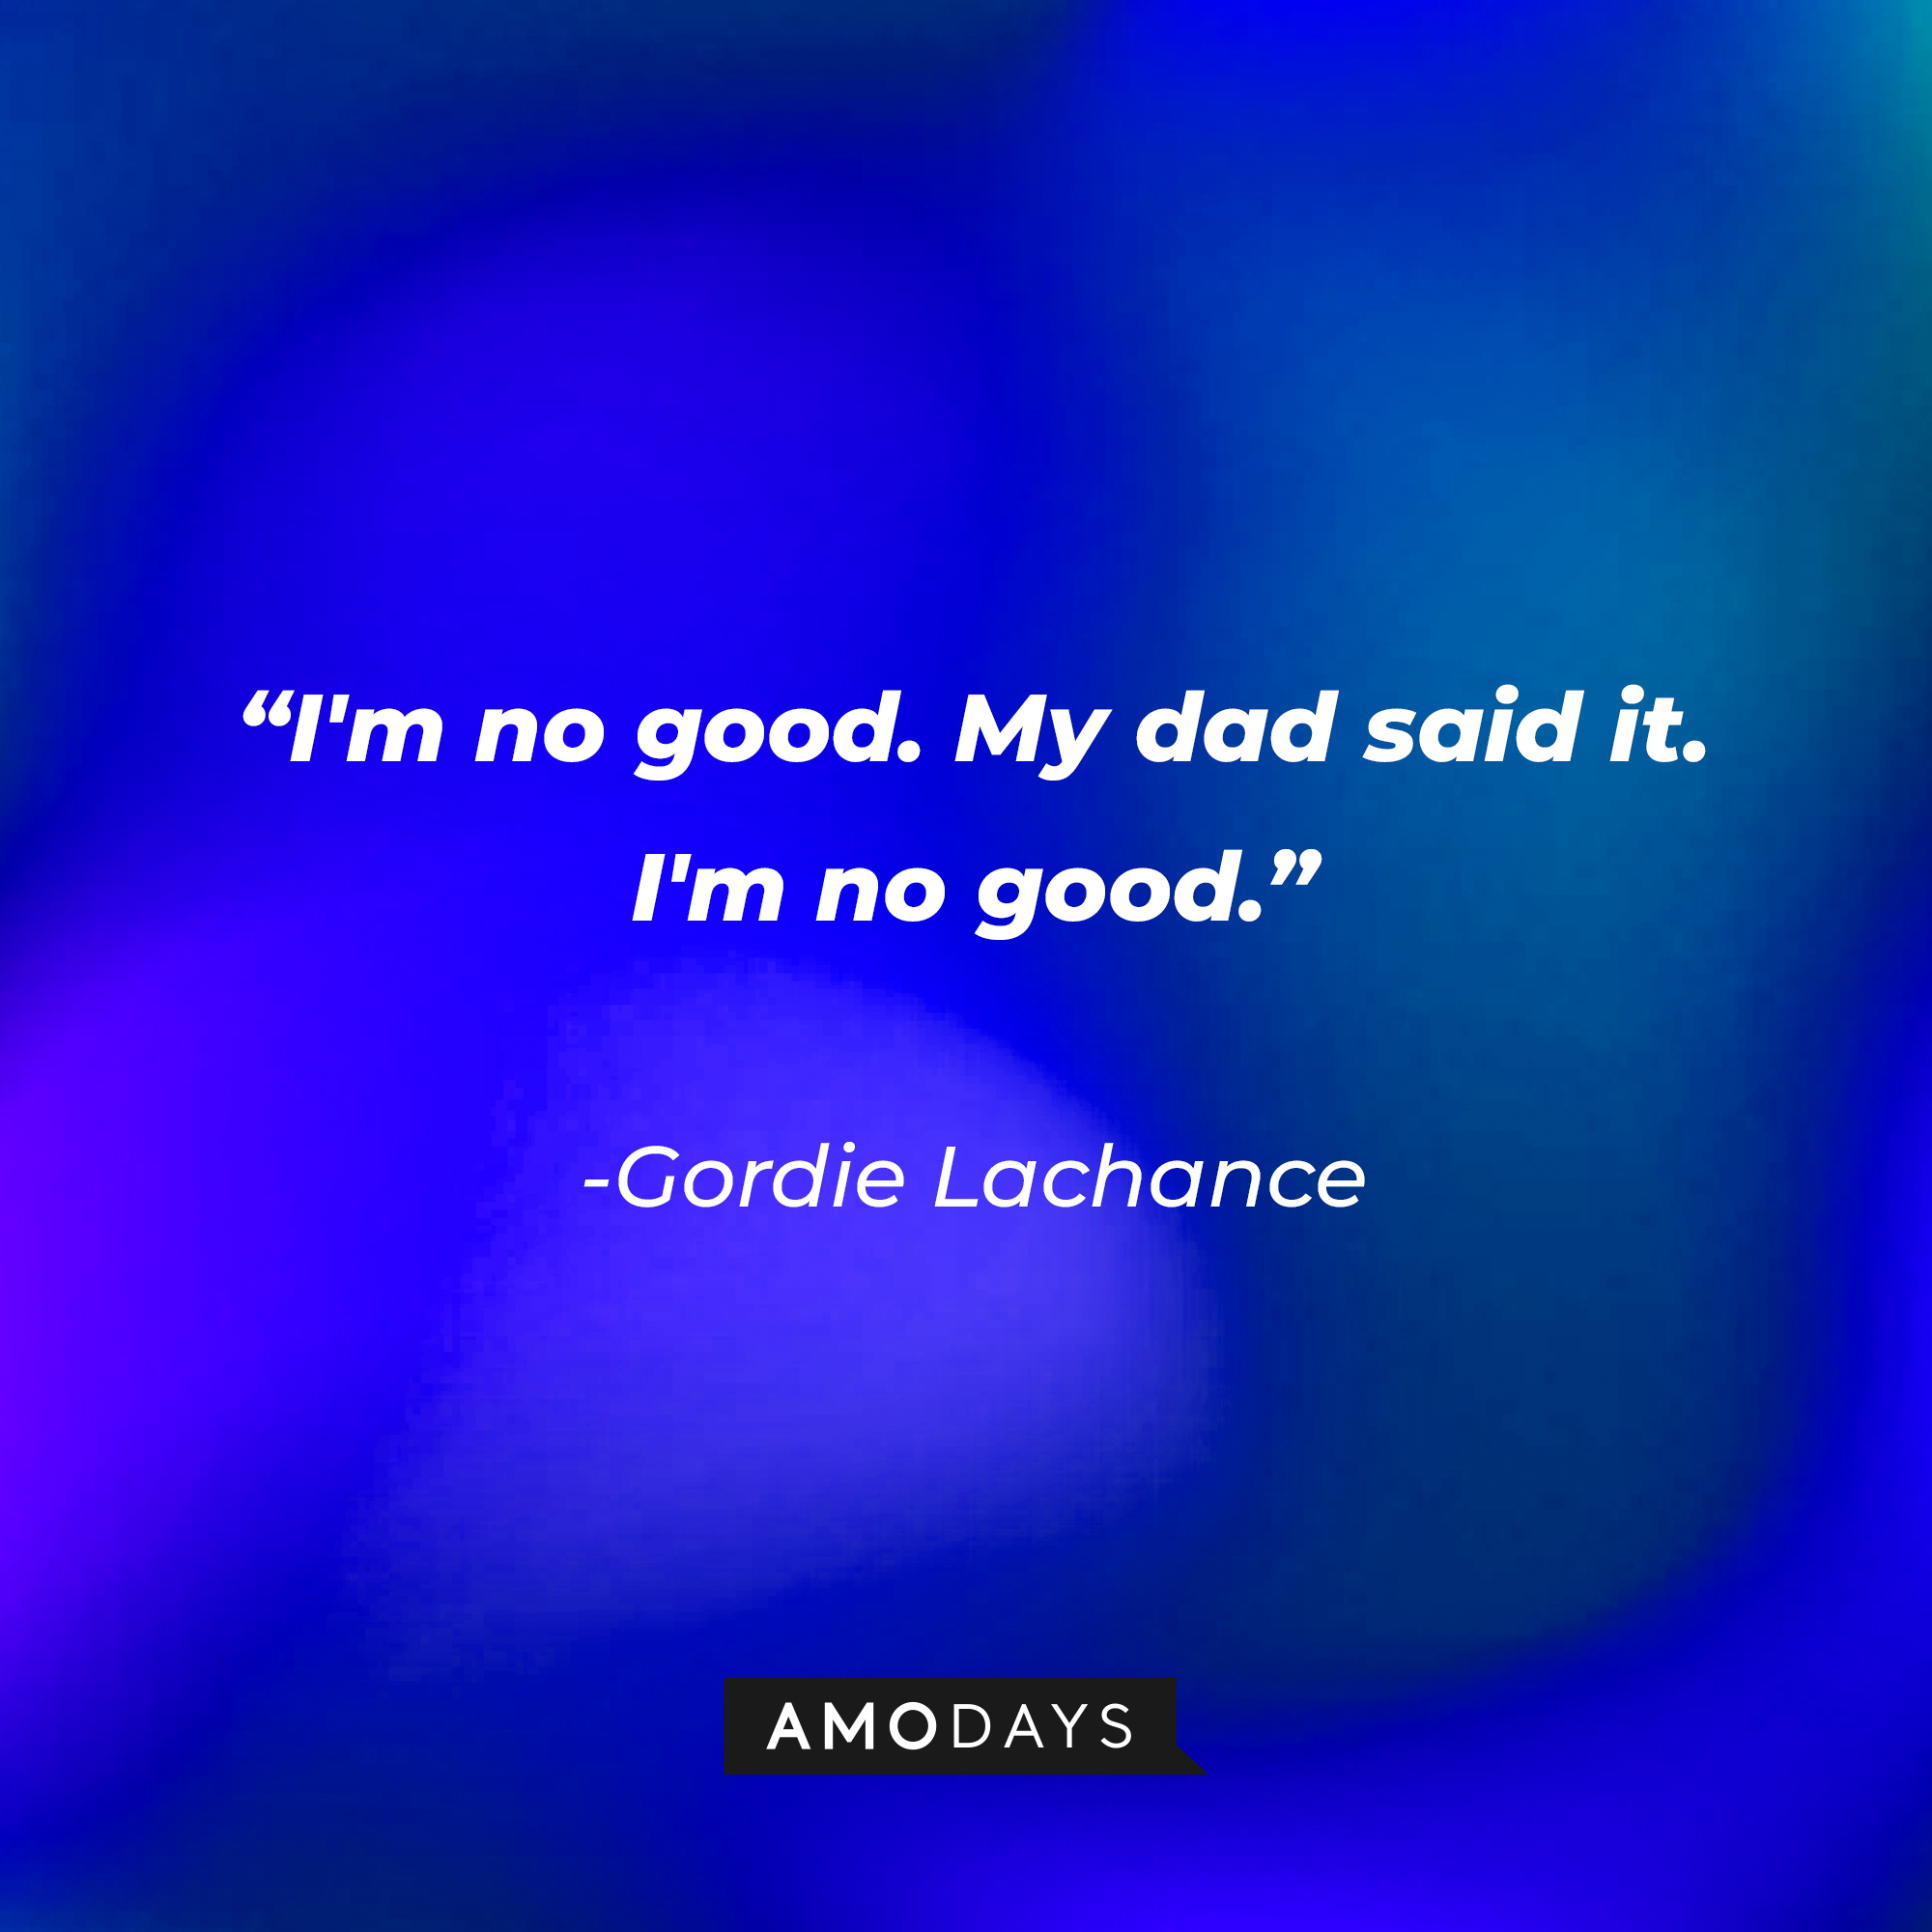 Gordie Lachance’s quote:  I'm no good. 'My dad said it. I'm no good."  | Source: AmoDays